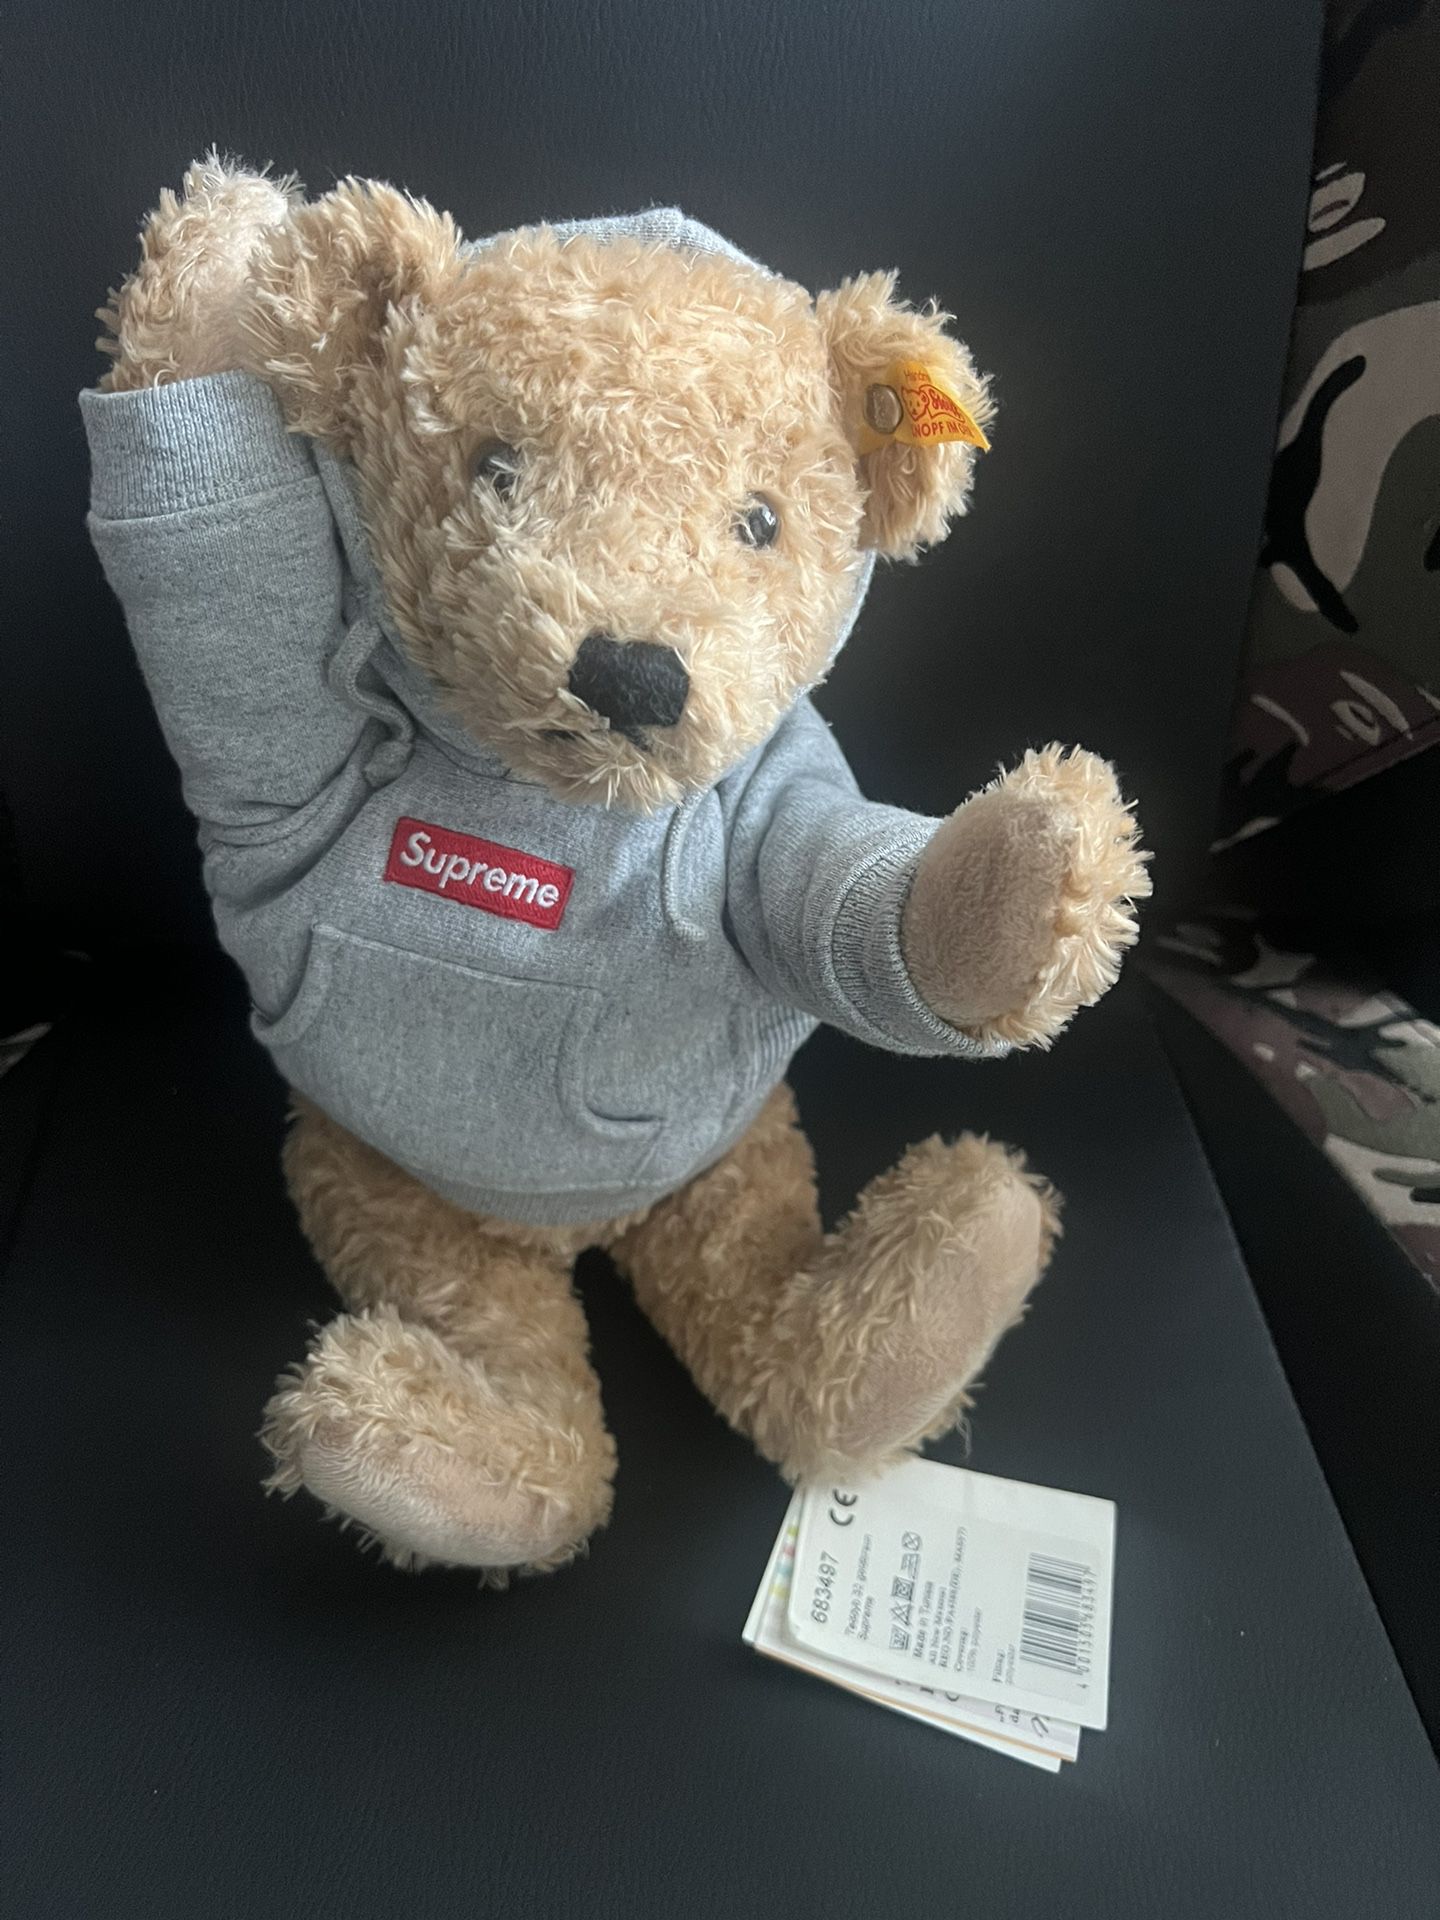 Supreme Steiff Teddy Bear for Sale in Anaheim, CA - OfferUp